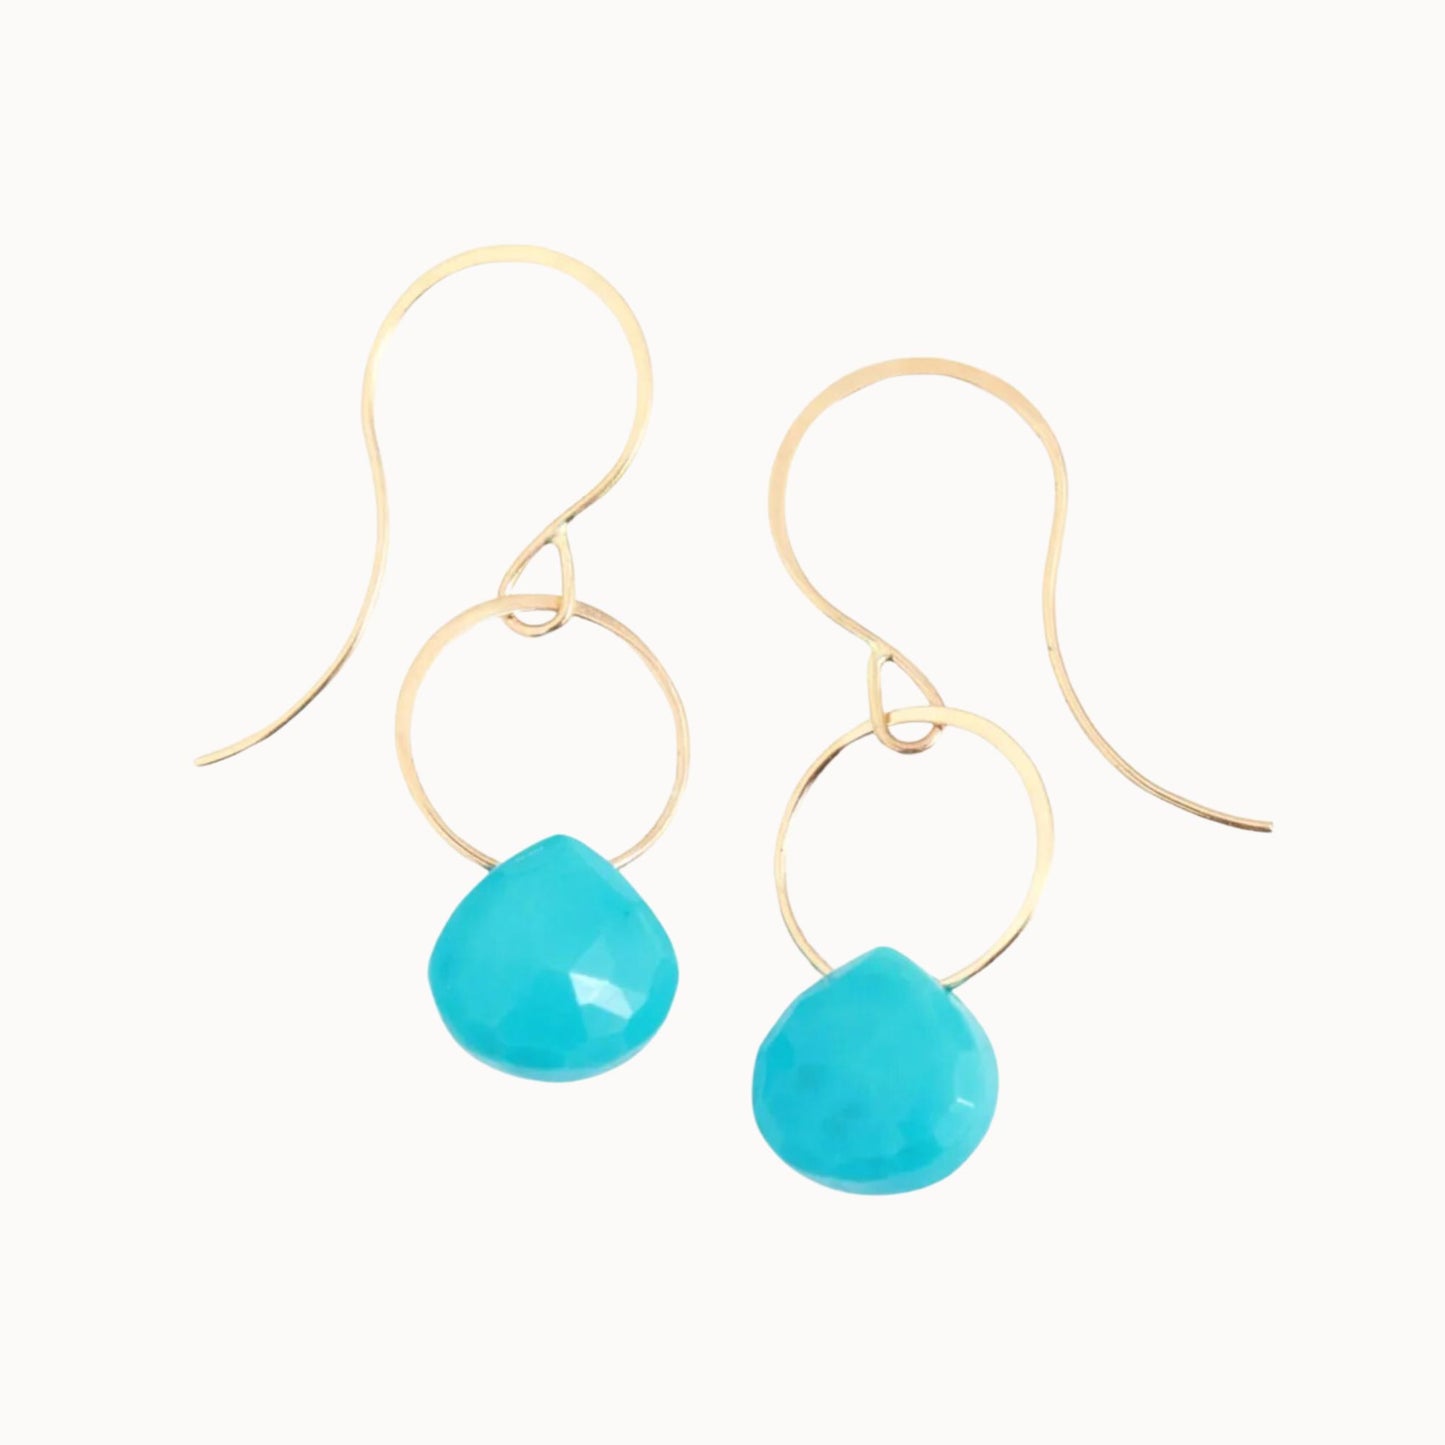 Melissa Joy Manning 14k Gold Turquoise Single Hoop Drop Earrings